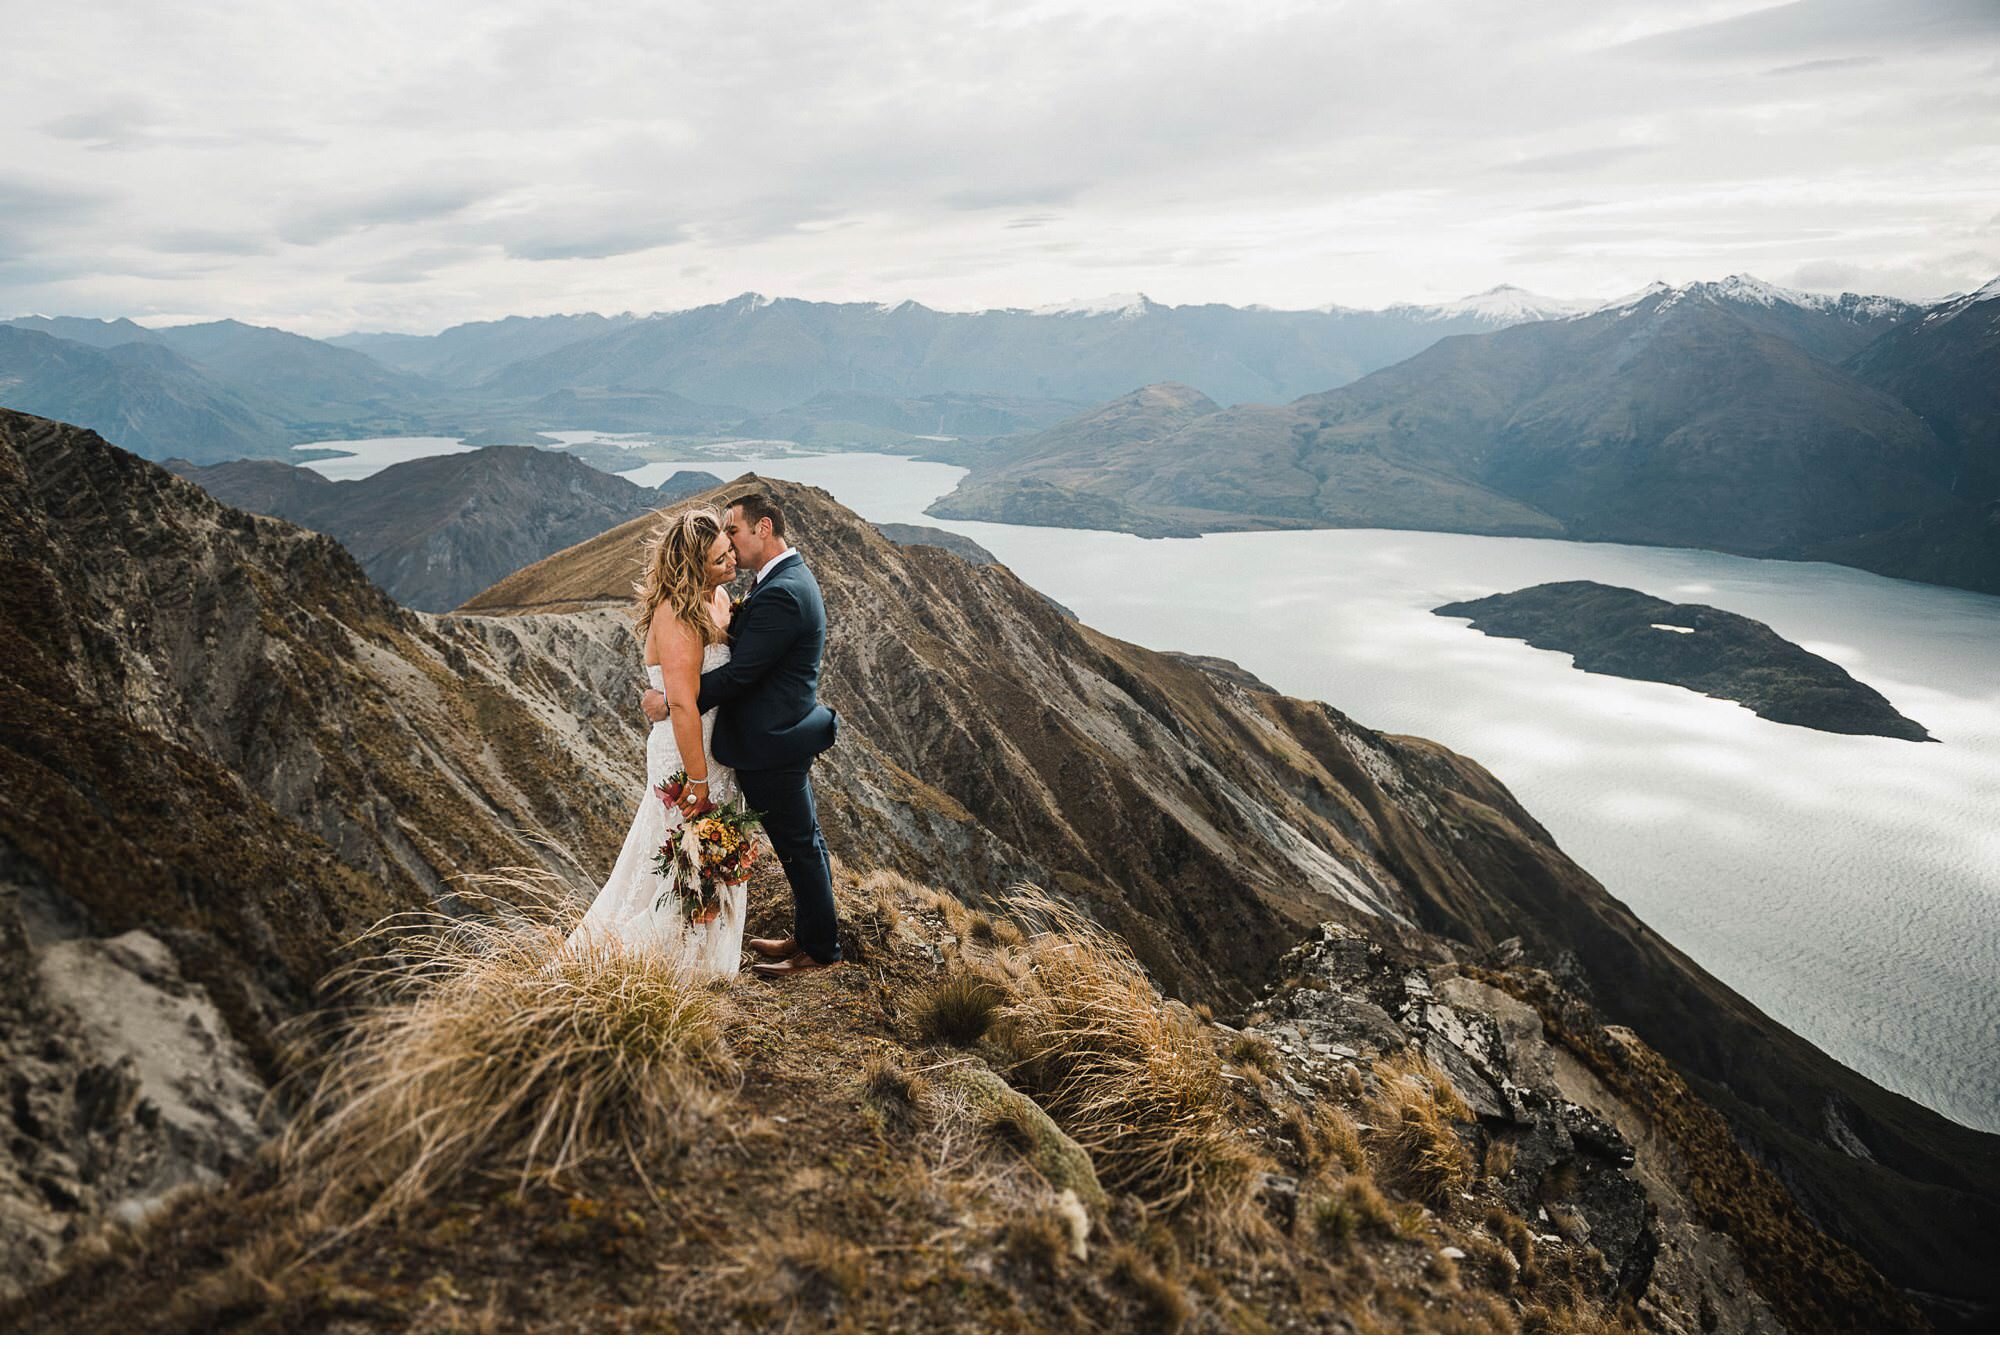 047 - New Zealand Wedding Photography Highlights.jpg